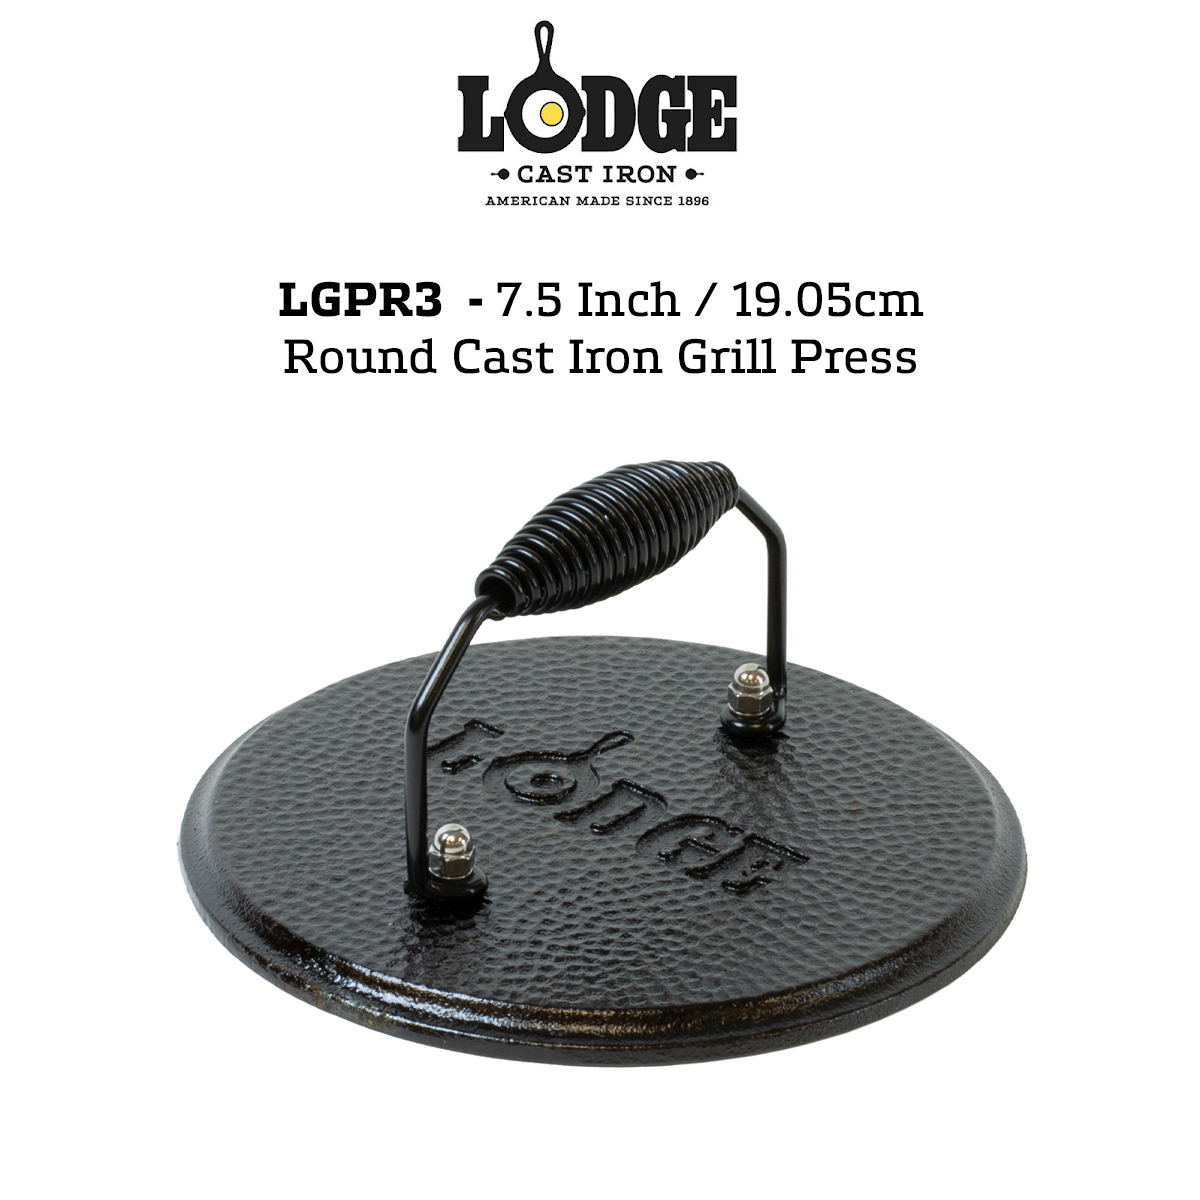 Lodge Cast Iron - Round Grill Press